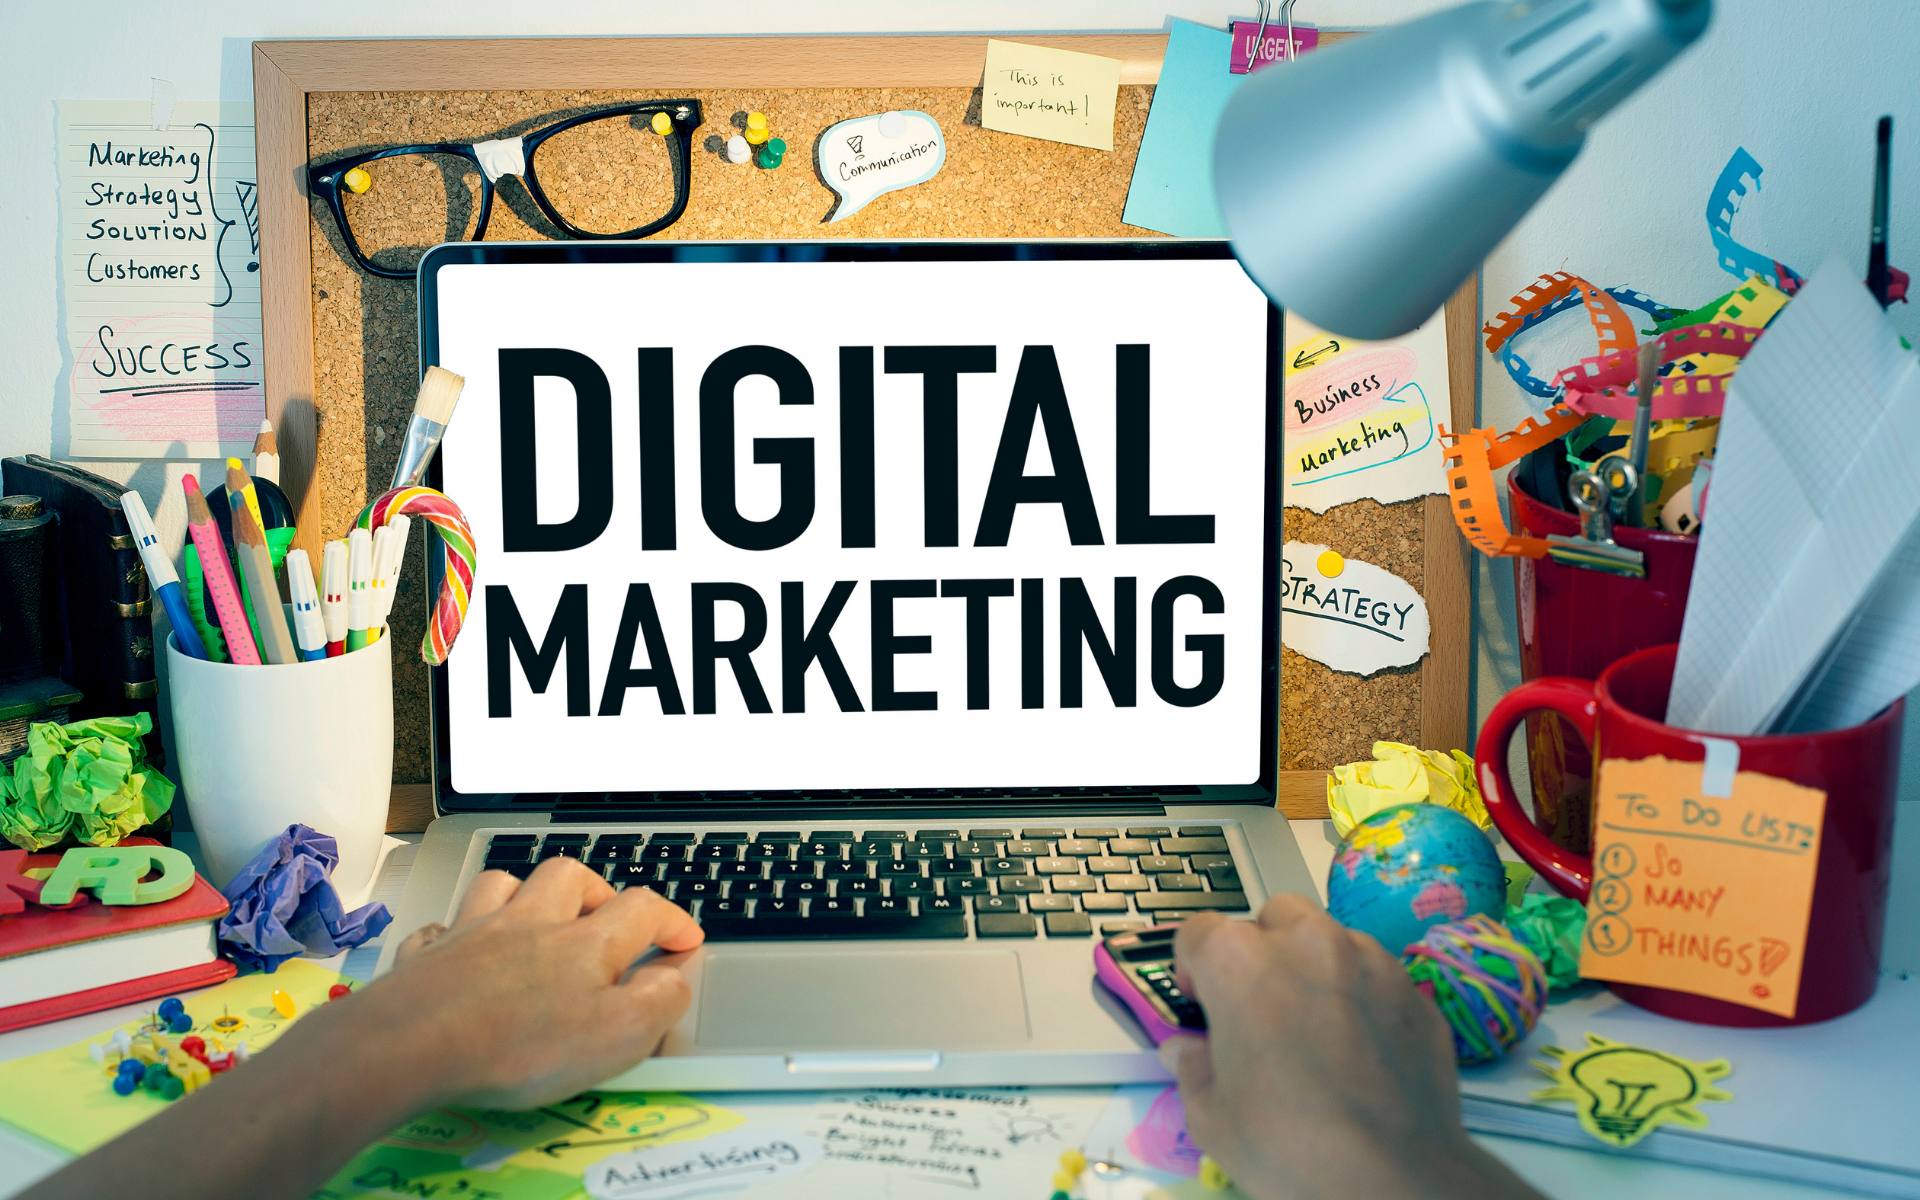 Digital Marketing Help You To Shape Your Business